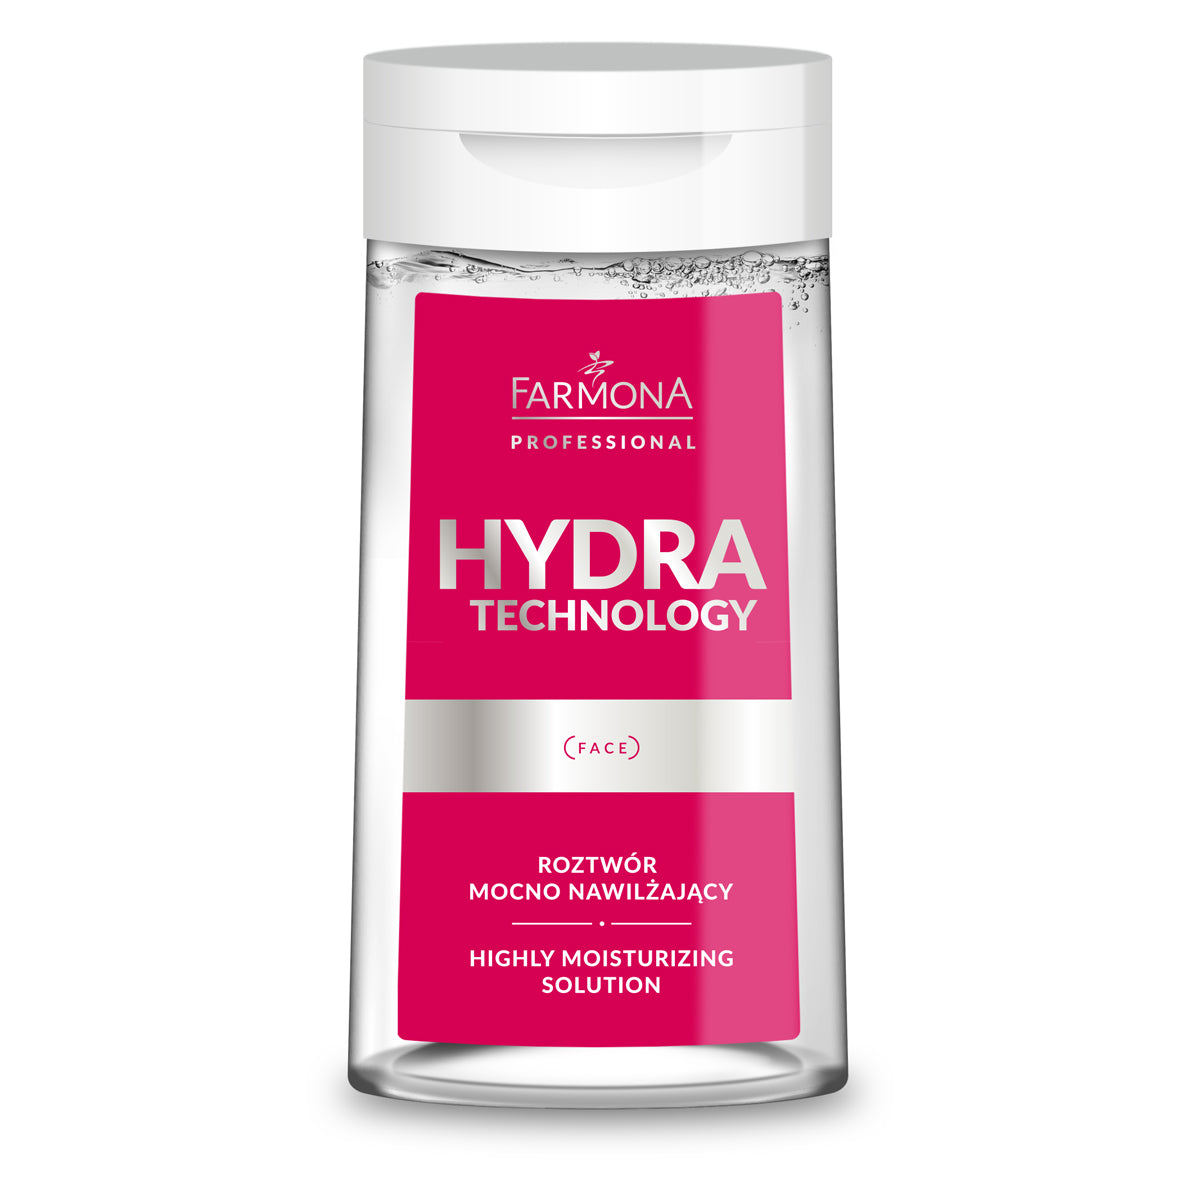 FARMONA HYDRA TECHNOLOGY Solution hautement hydratante 100 ml